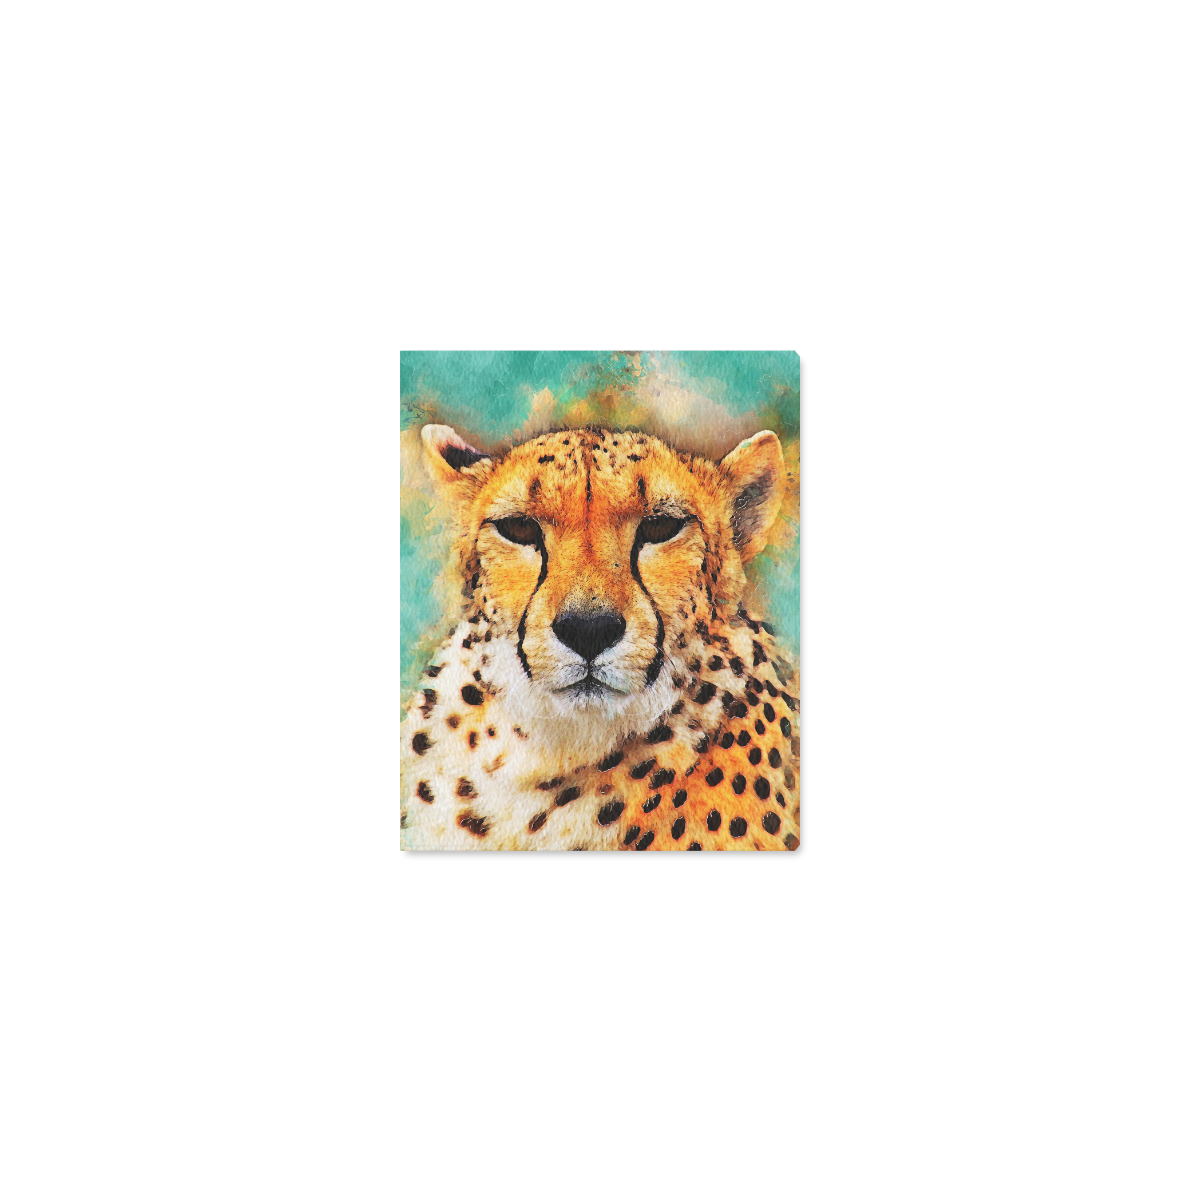 gepard leopard #gepard #leopard #cat Canvas Print 8"x10"